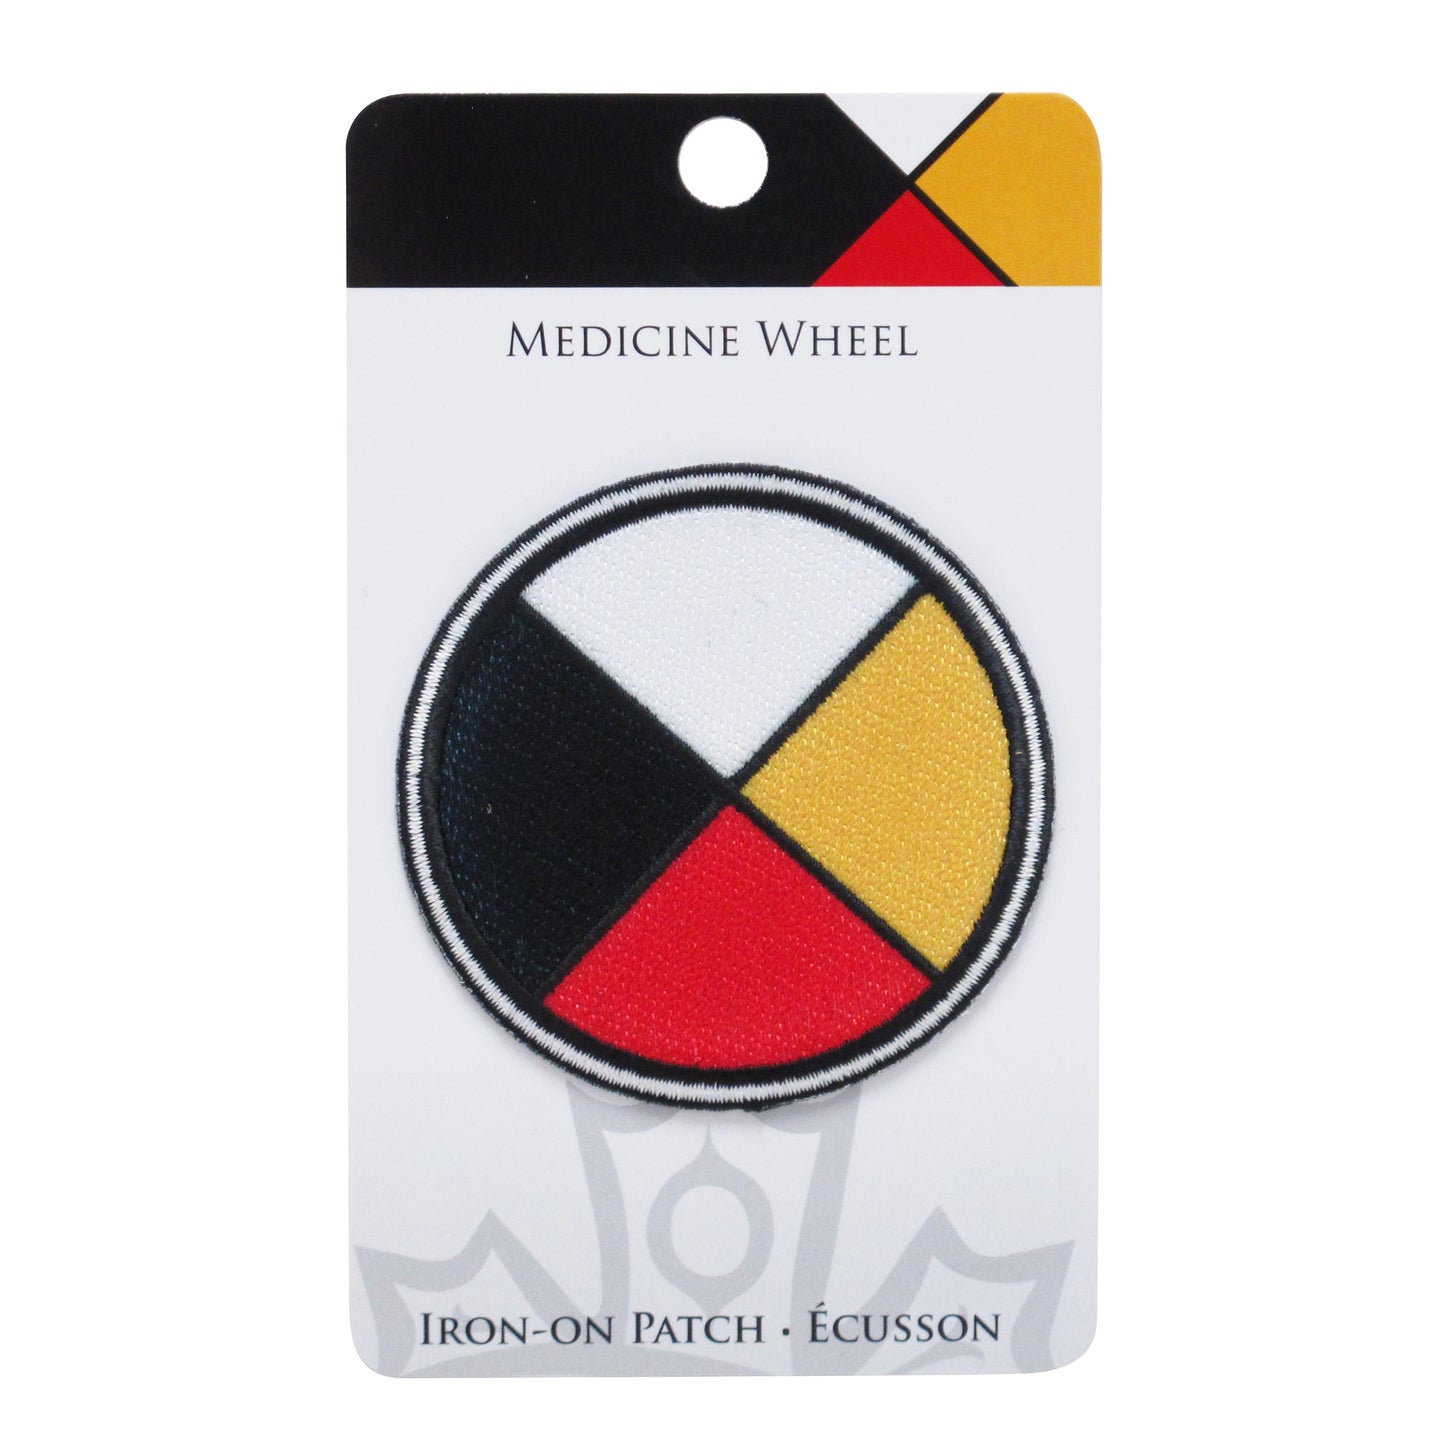 Iron-on Patch - Medicine Wheel